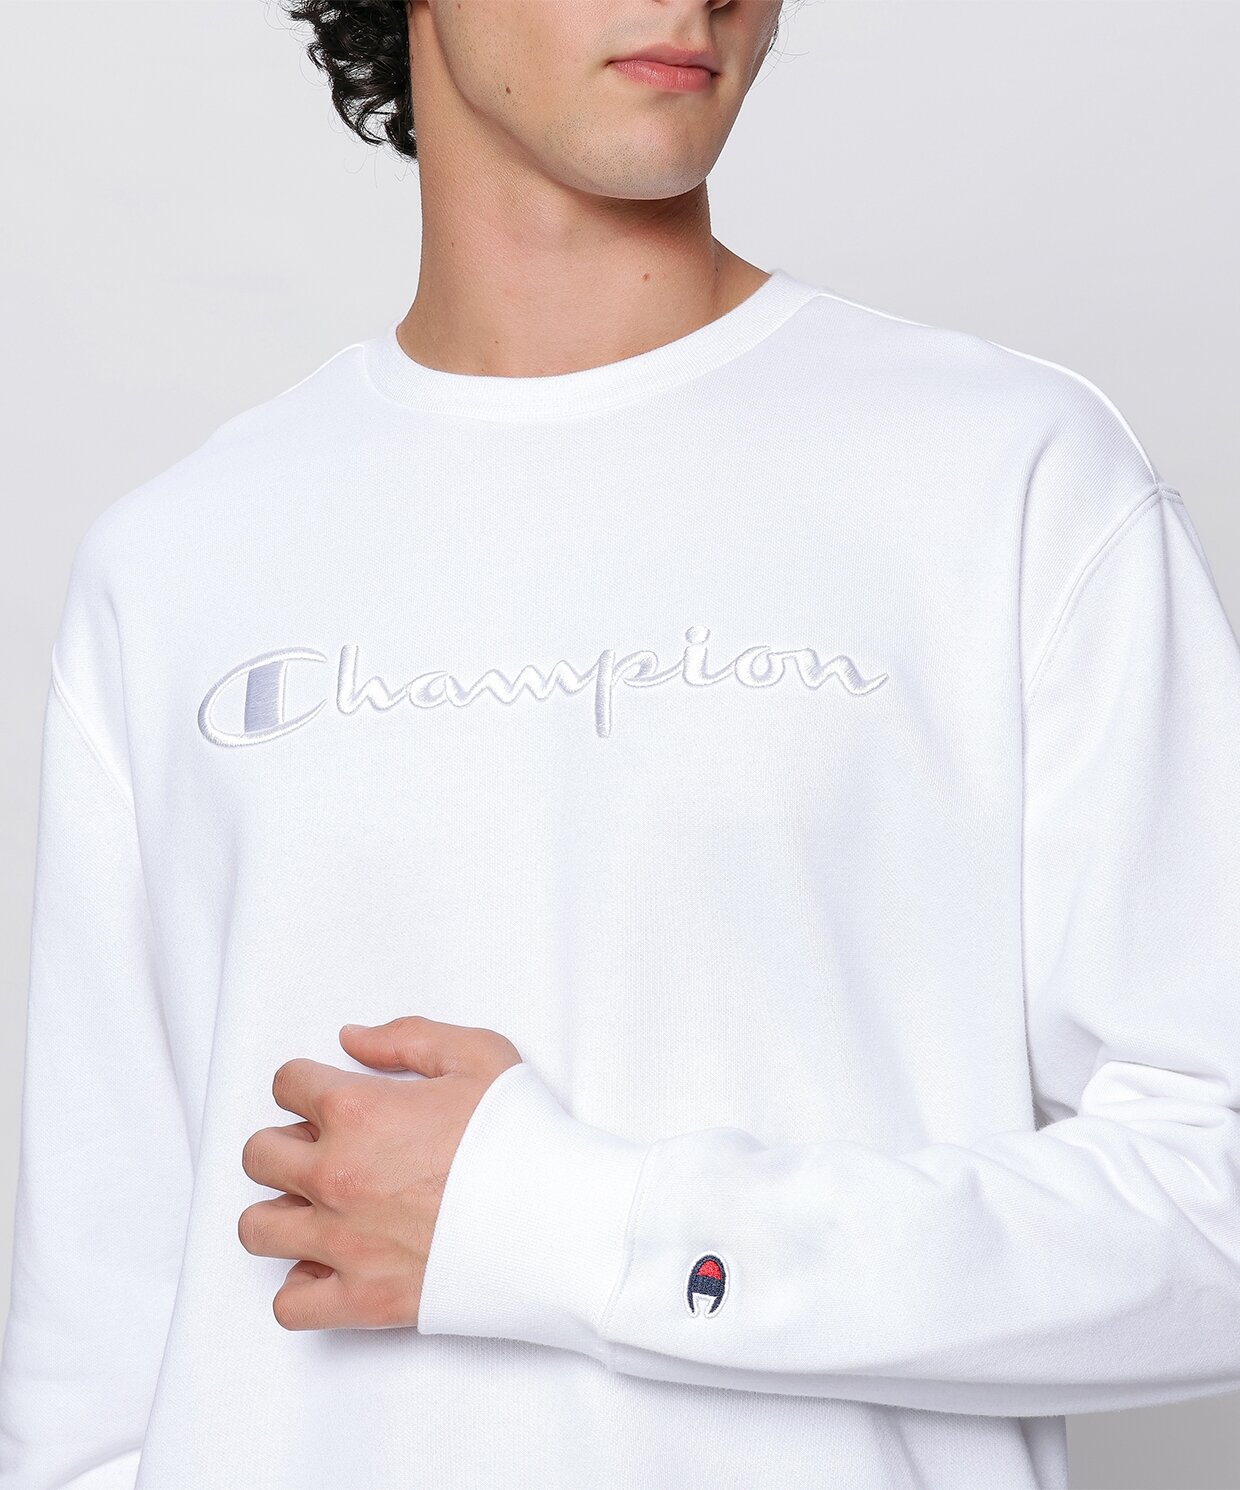 resm Champion Crewneck Sweatshirt